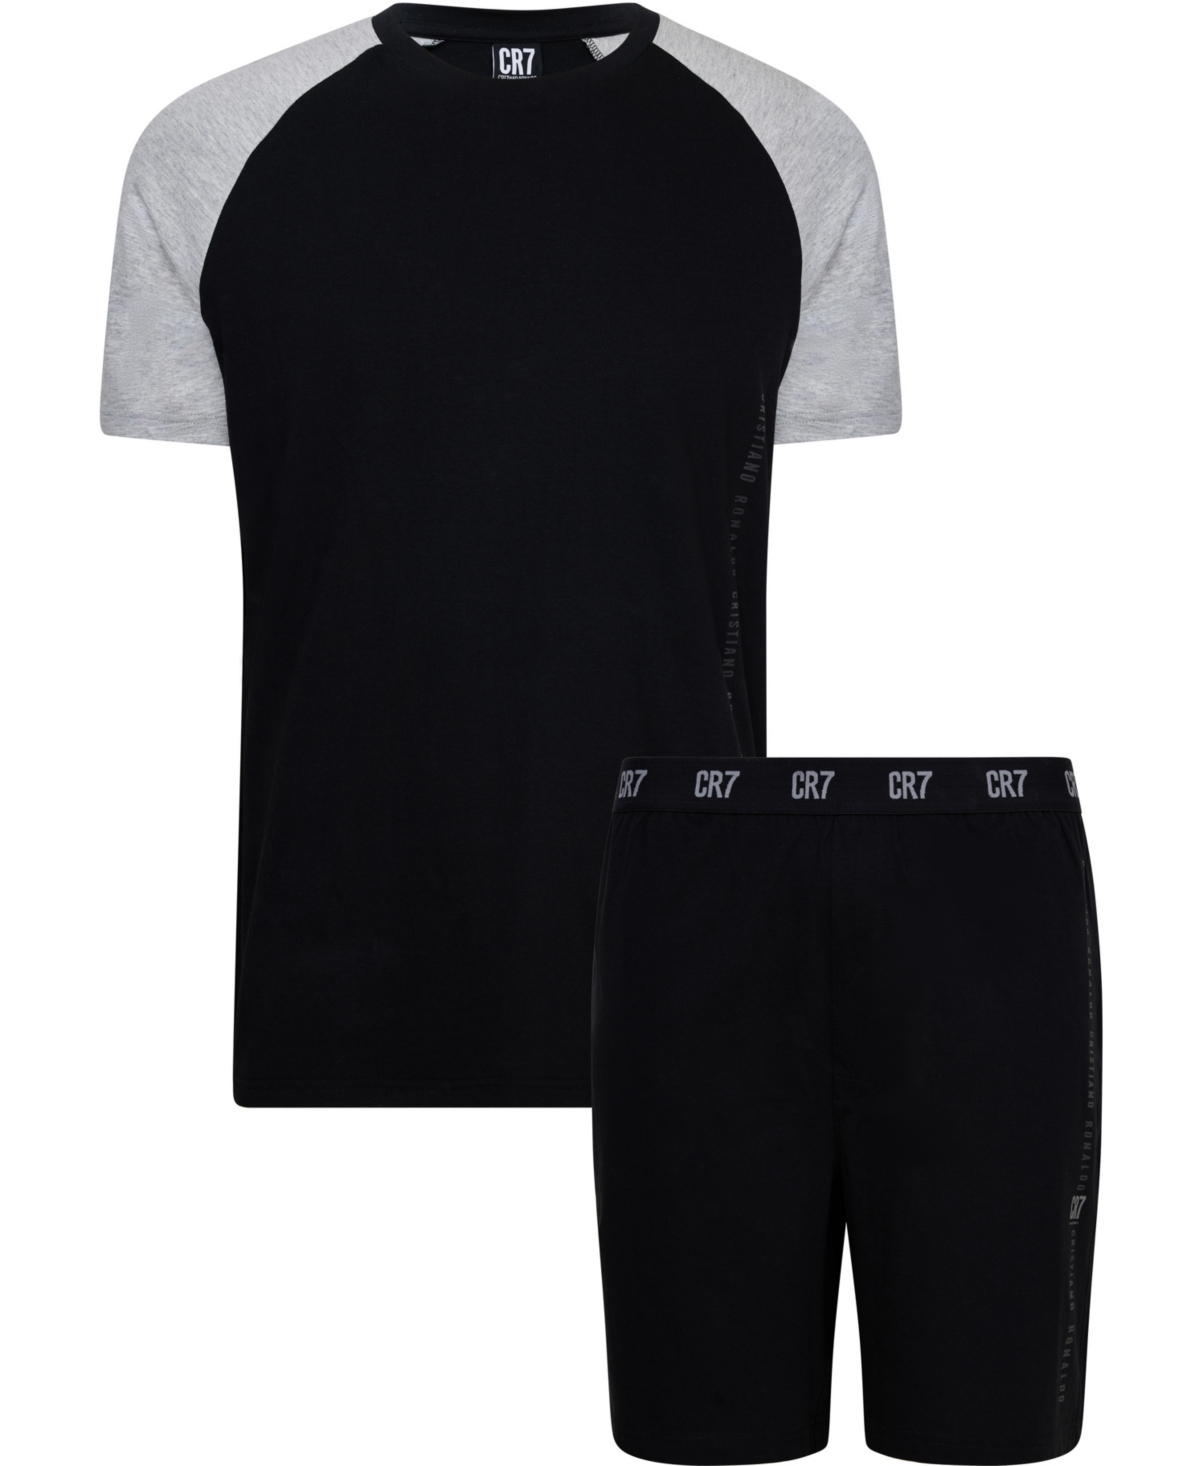 Men's Cotton Loungewear Top and Short Set - Black, Gray